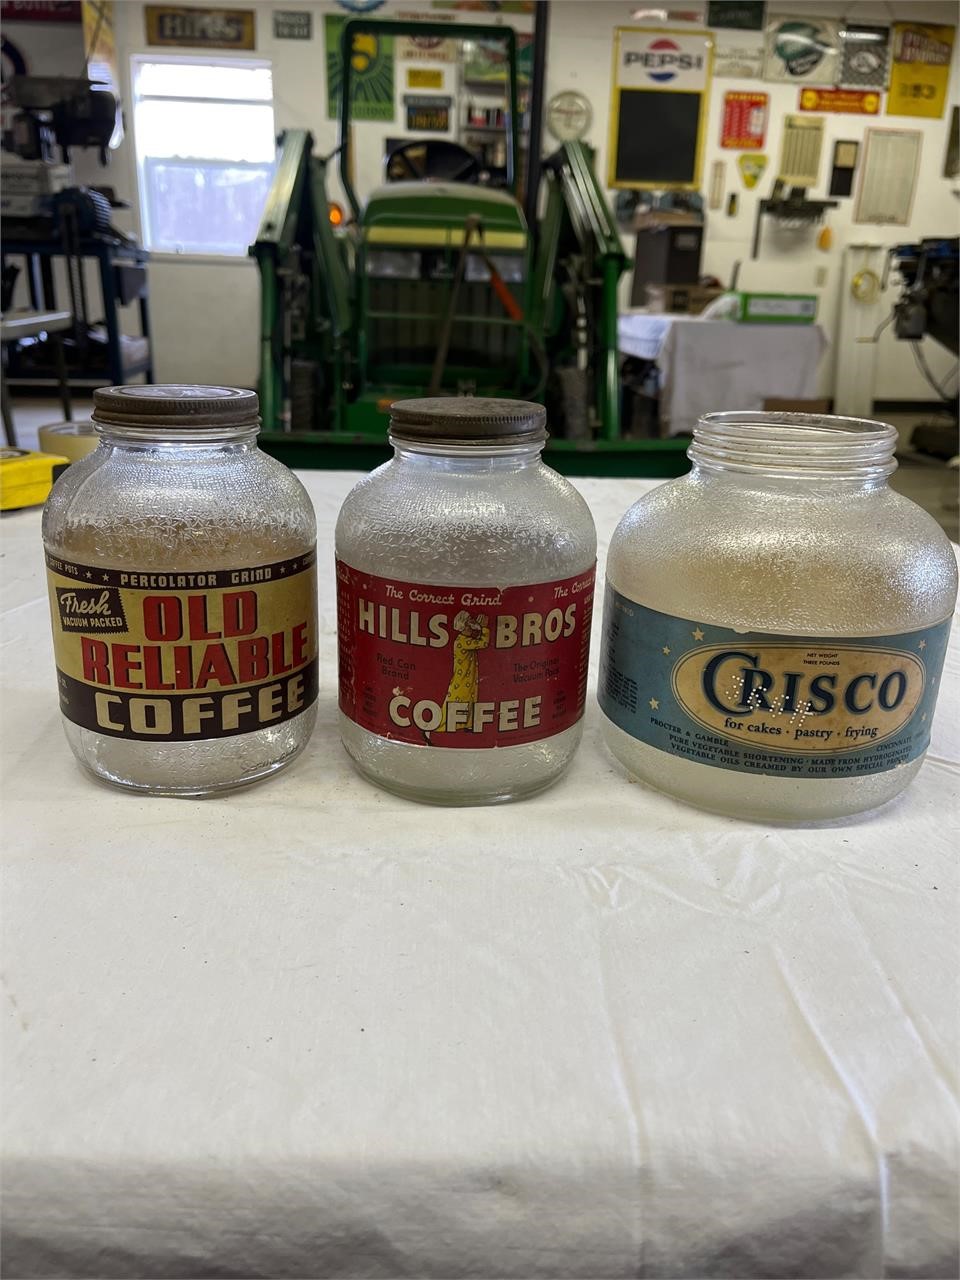 3 labeled jars.